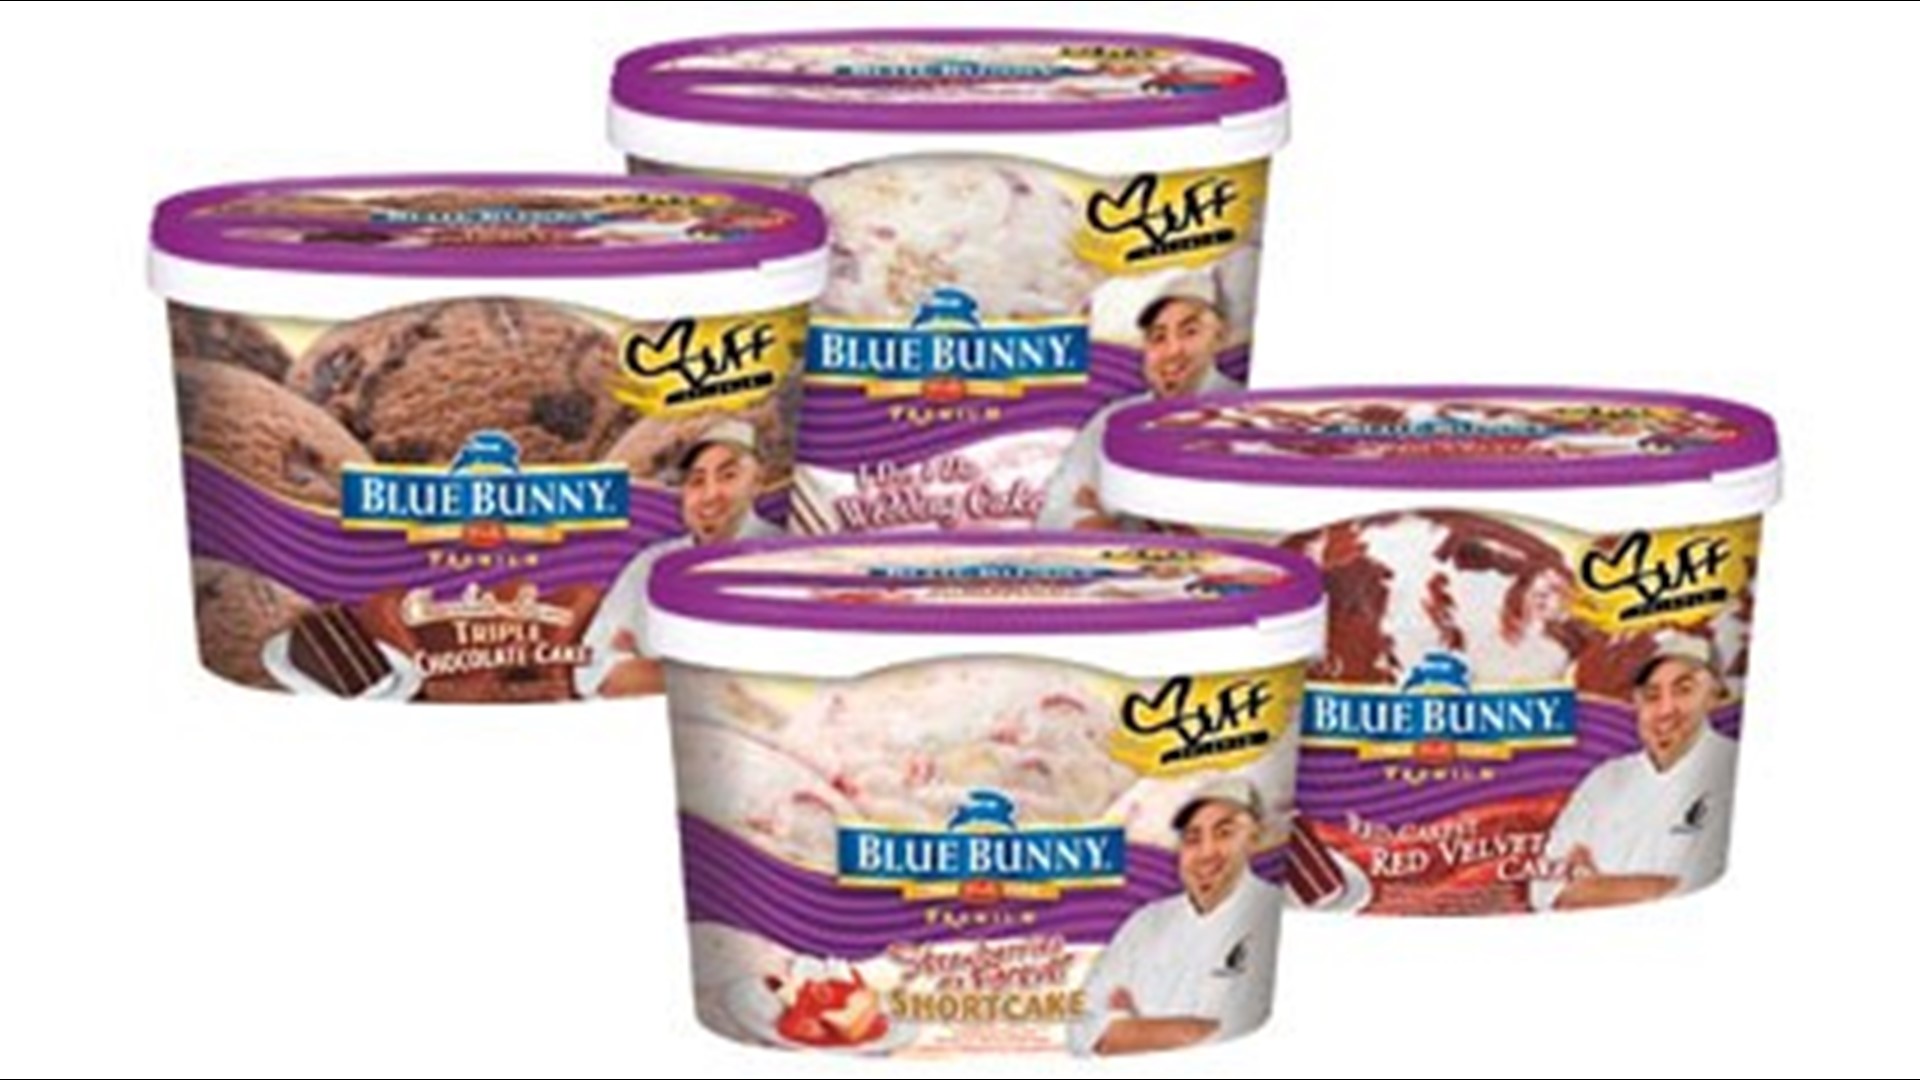 Wells' Dairy recalls Blue Bunny ice cream products